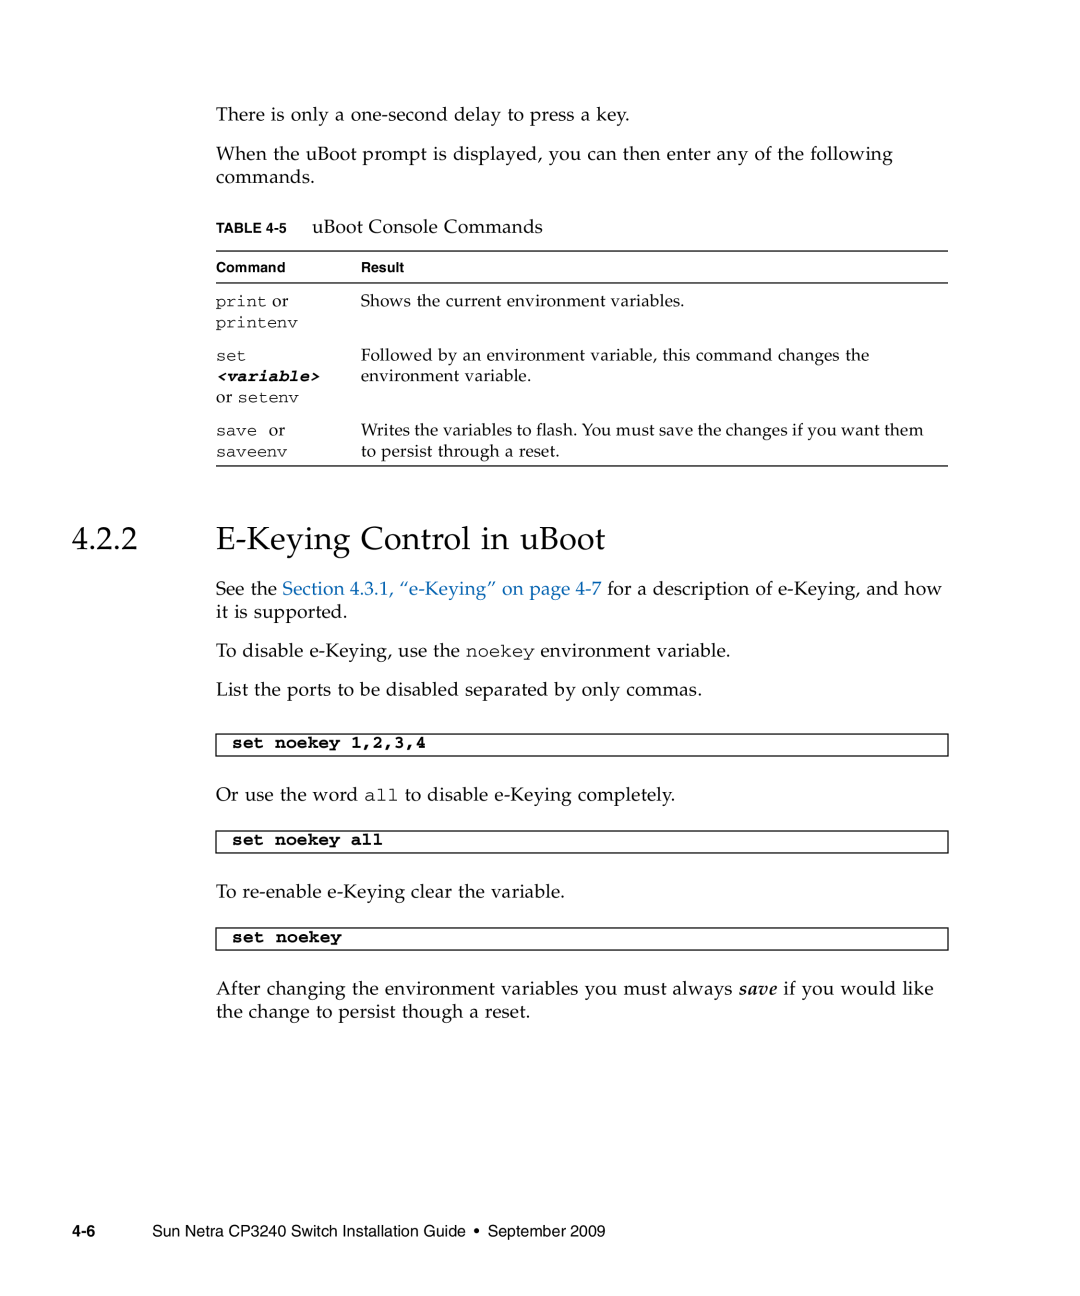 Sun Microsystems CP3240 manual E-Keying Control in uBoot 